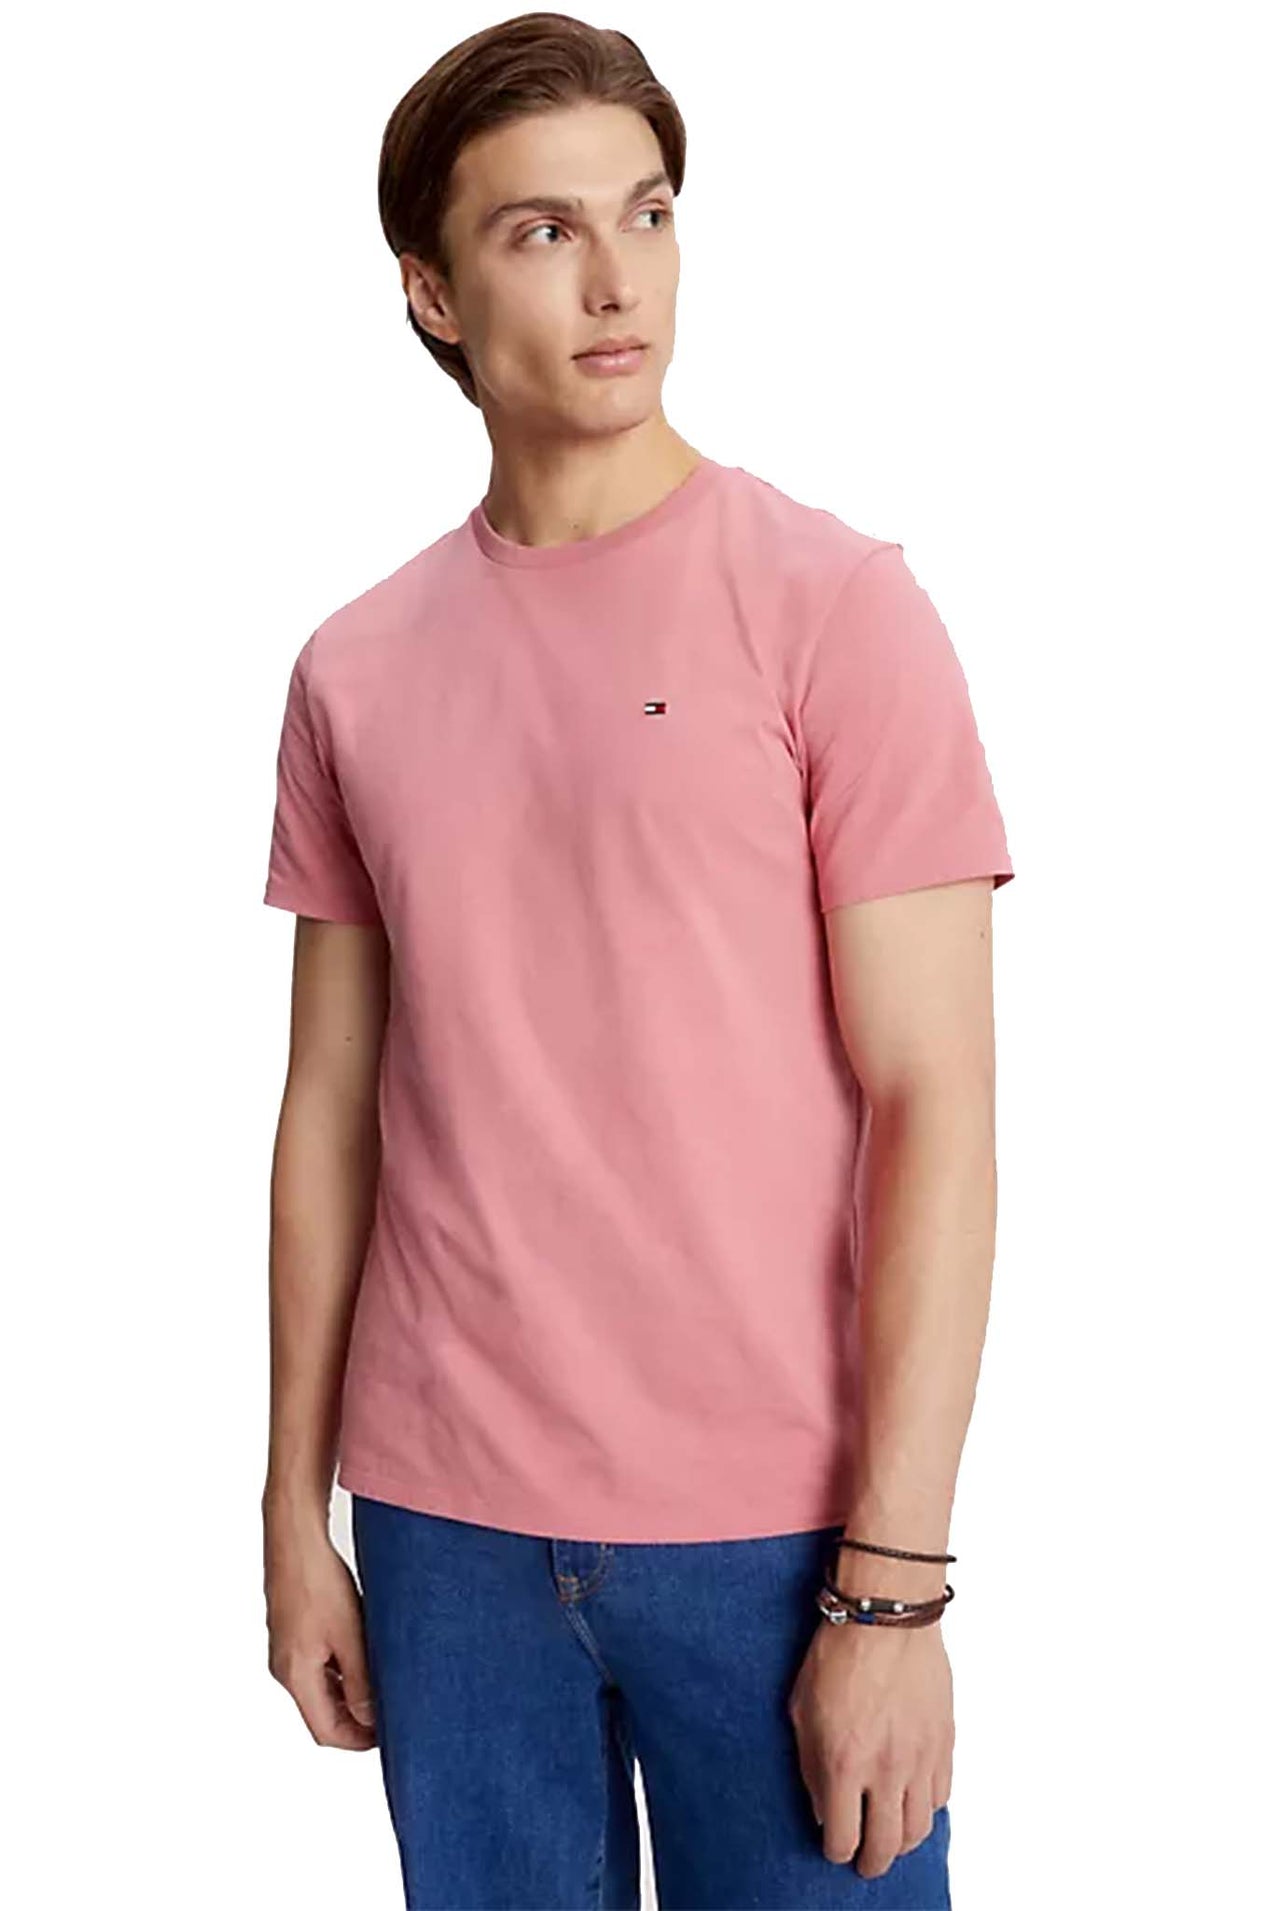 Camiseta Tommy Hilfiger Essential Solid Pink Blossom